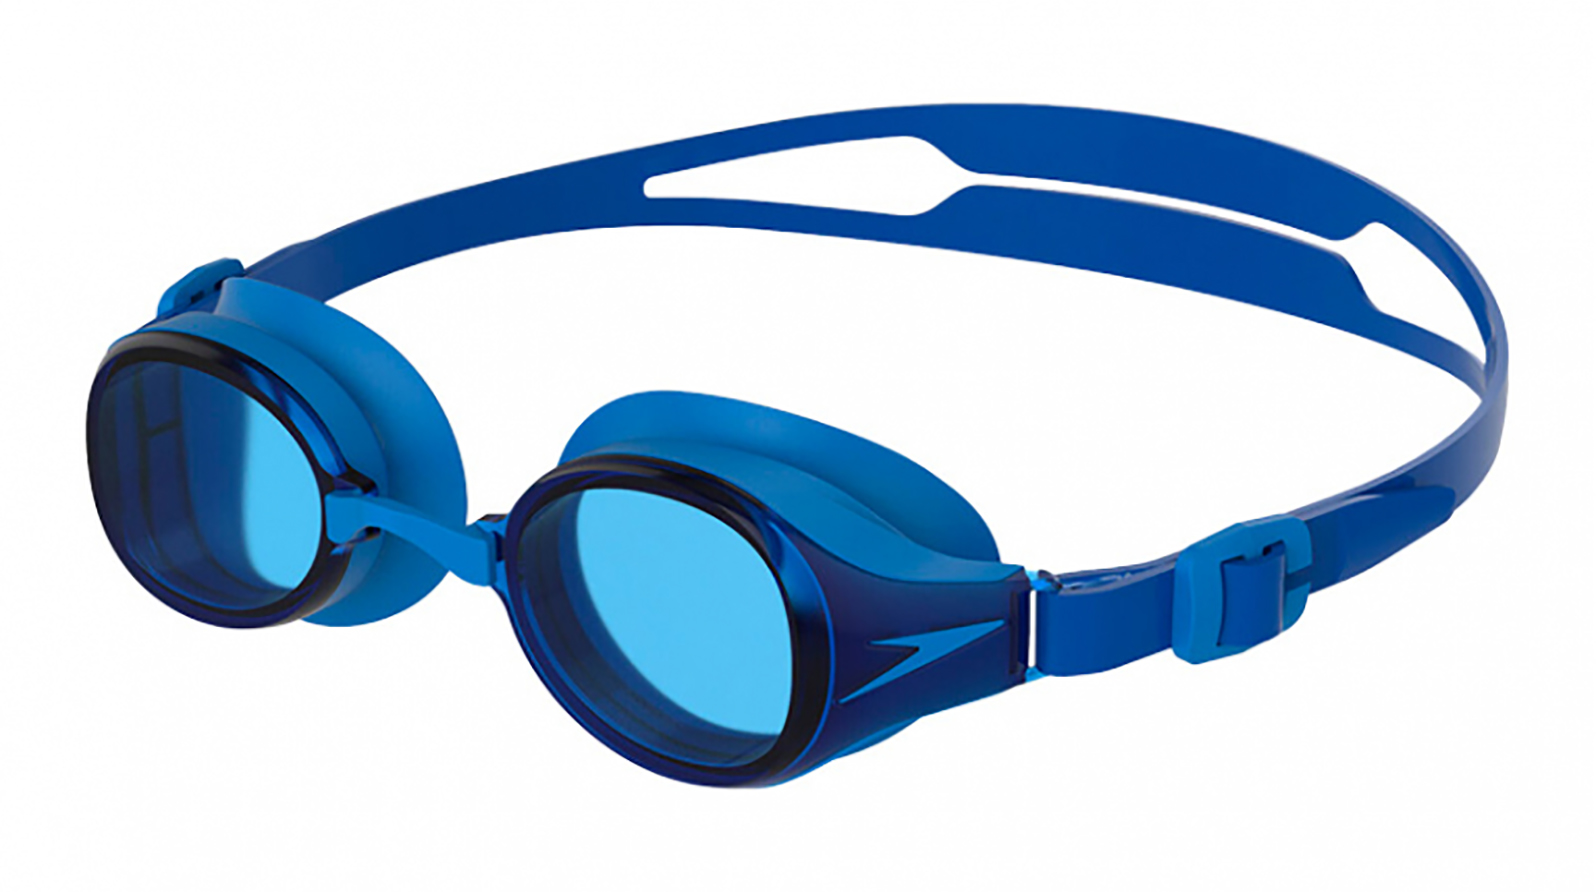 Speedo Очки для плавания Hydropure Optical F809 -4.0 speedo очки для плавания hydropure optical f808 2 5